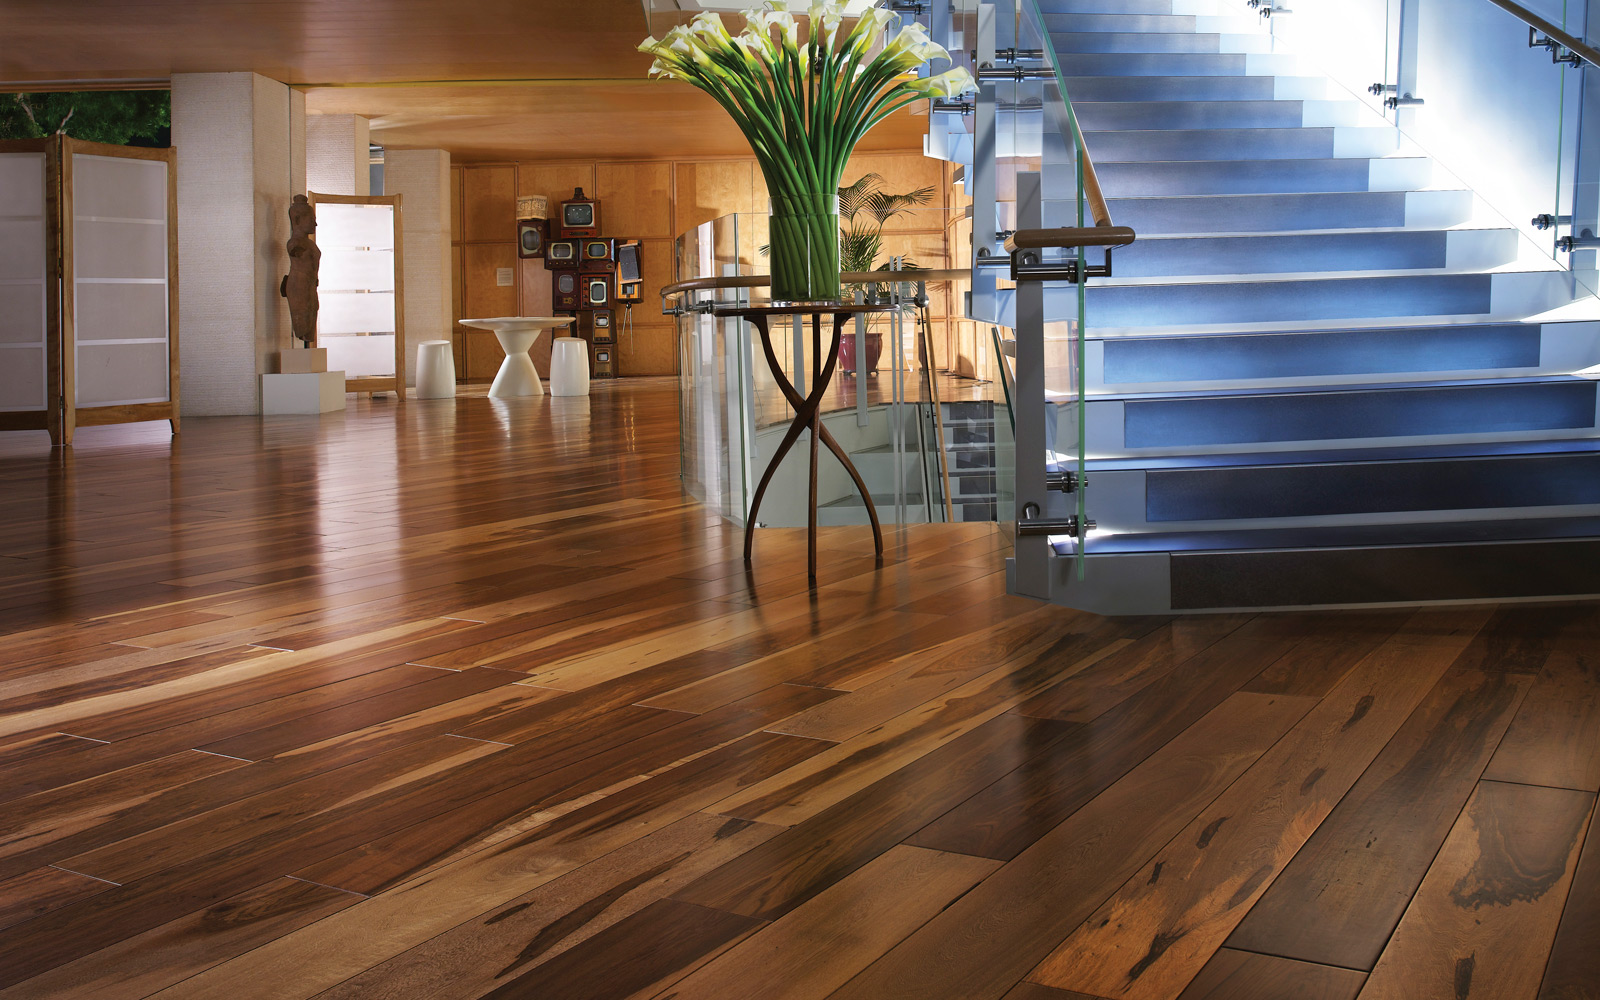 Choosing the Optimal Natural Wood Finish for Your Hardwood Floors